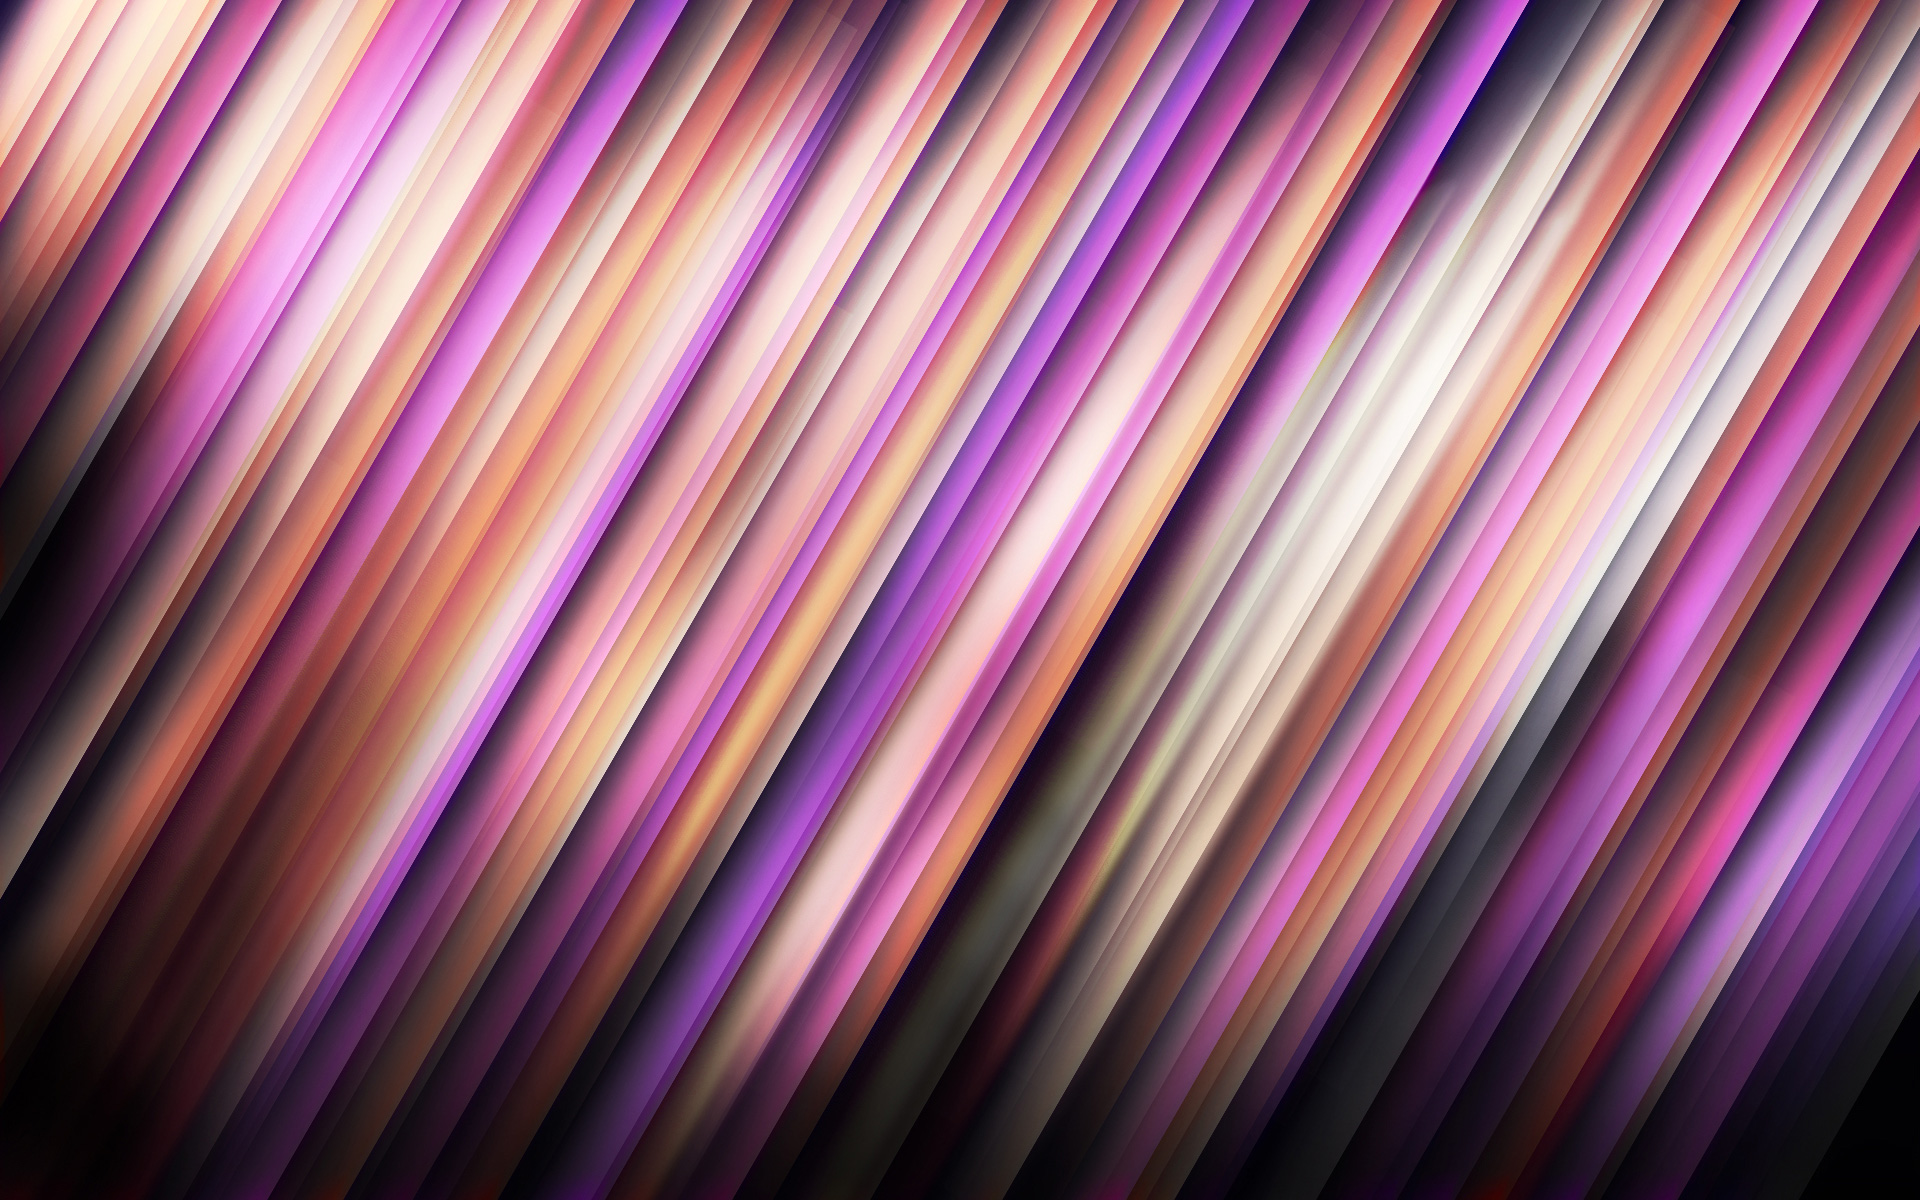 Diagonal lines abstract photo